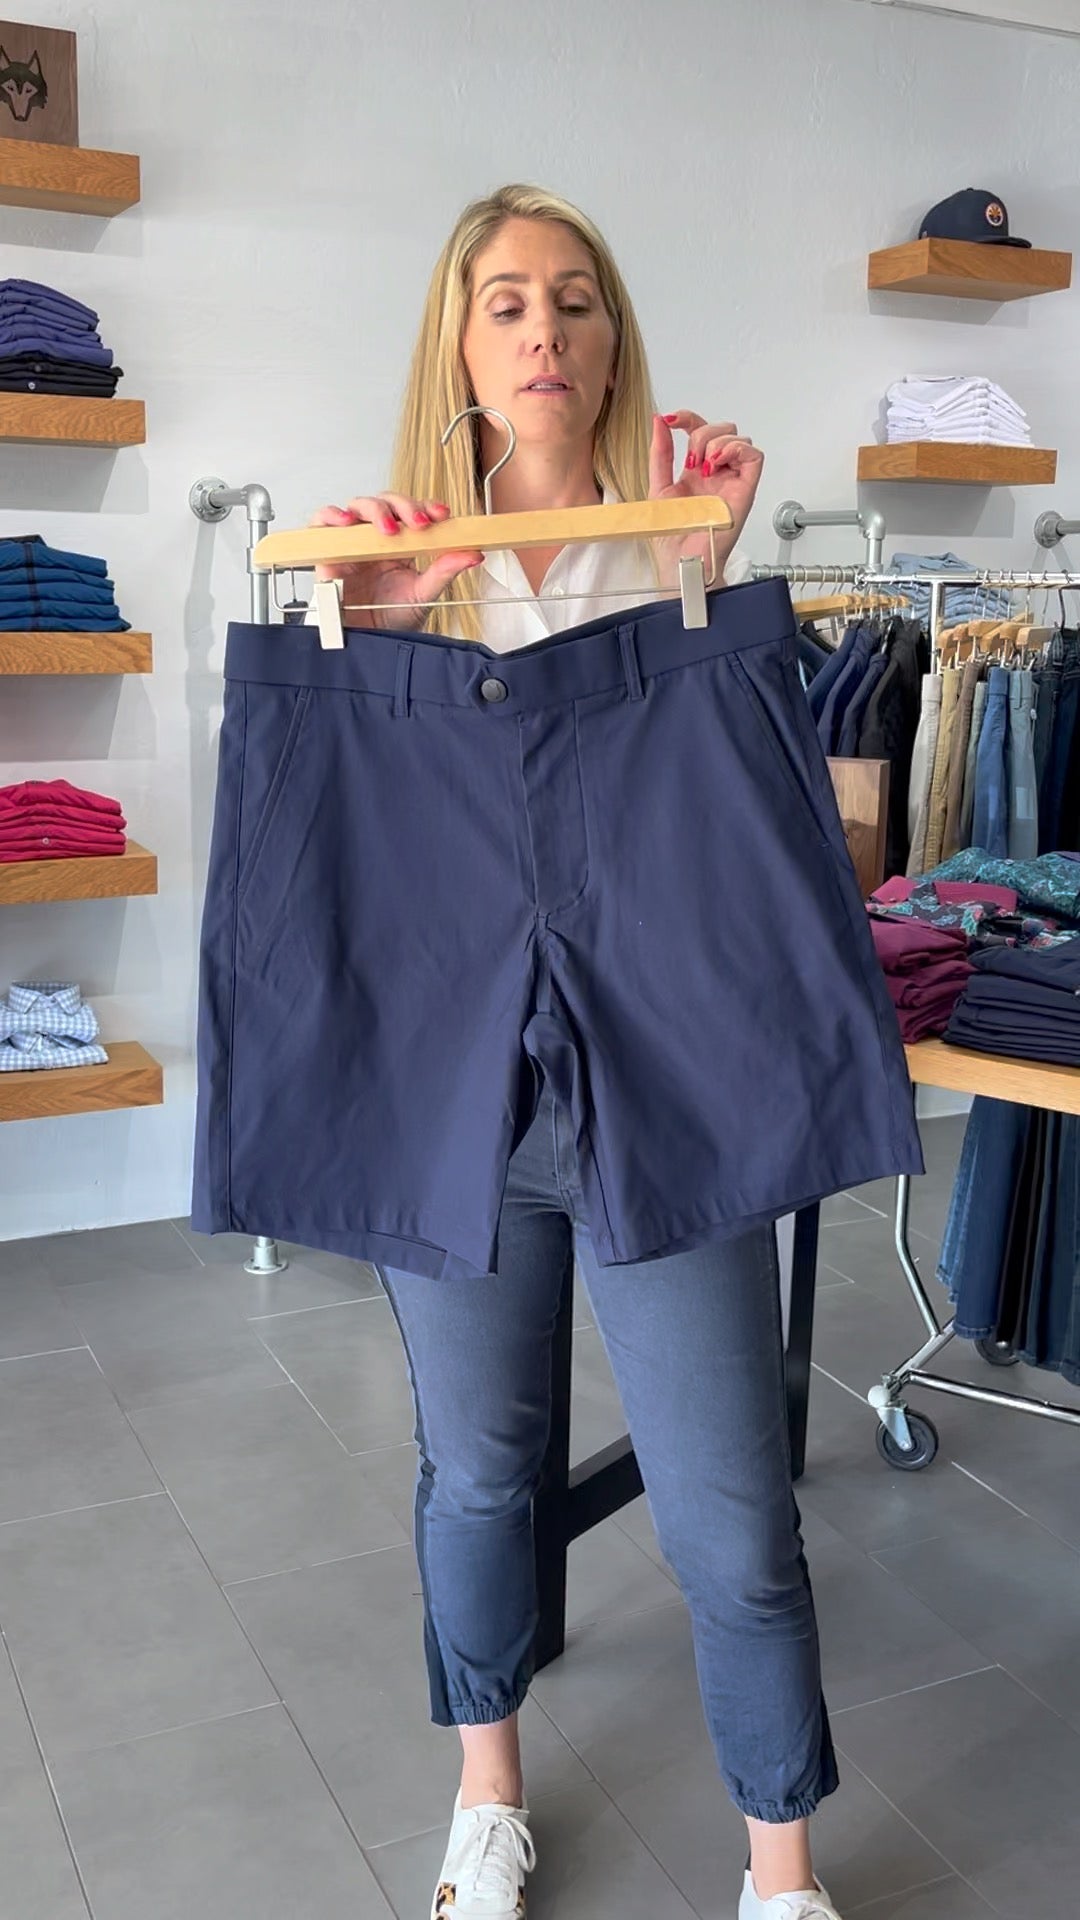 Wainscott Shorts by Greyson Clothiers